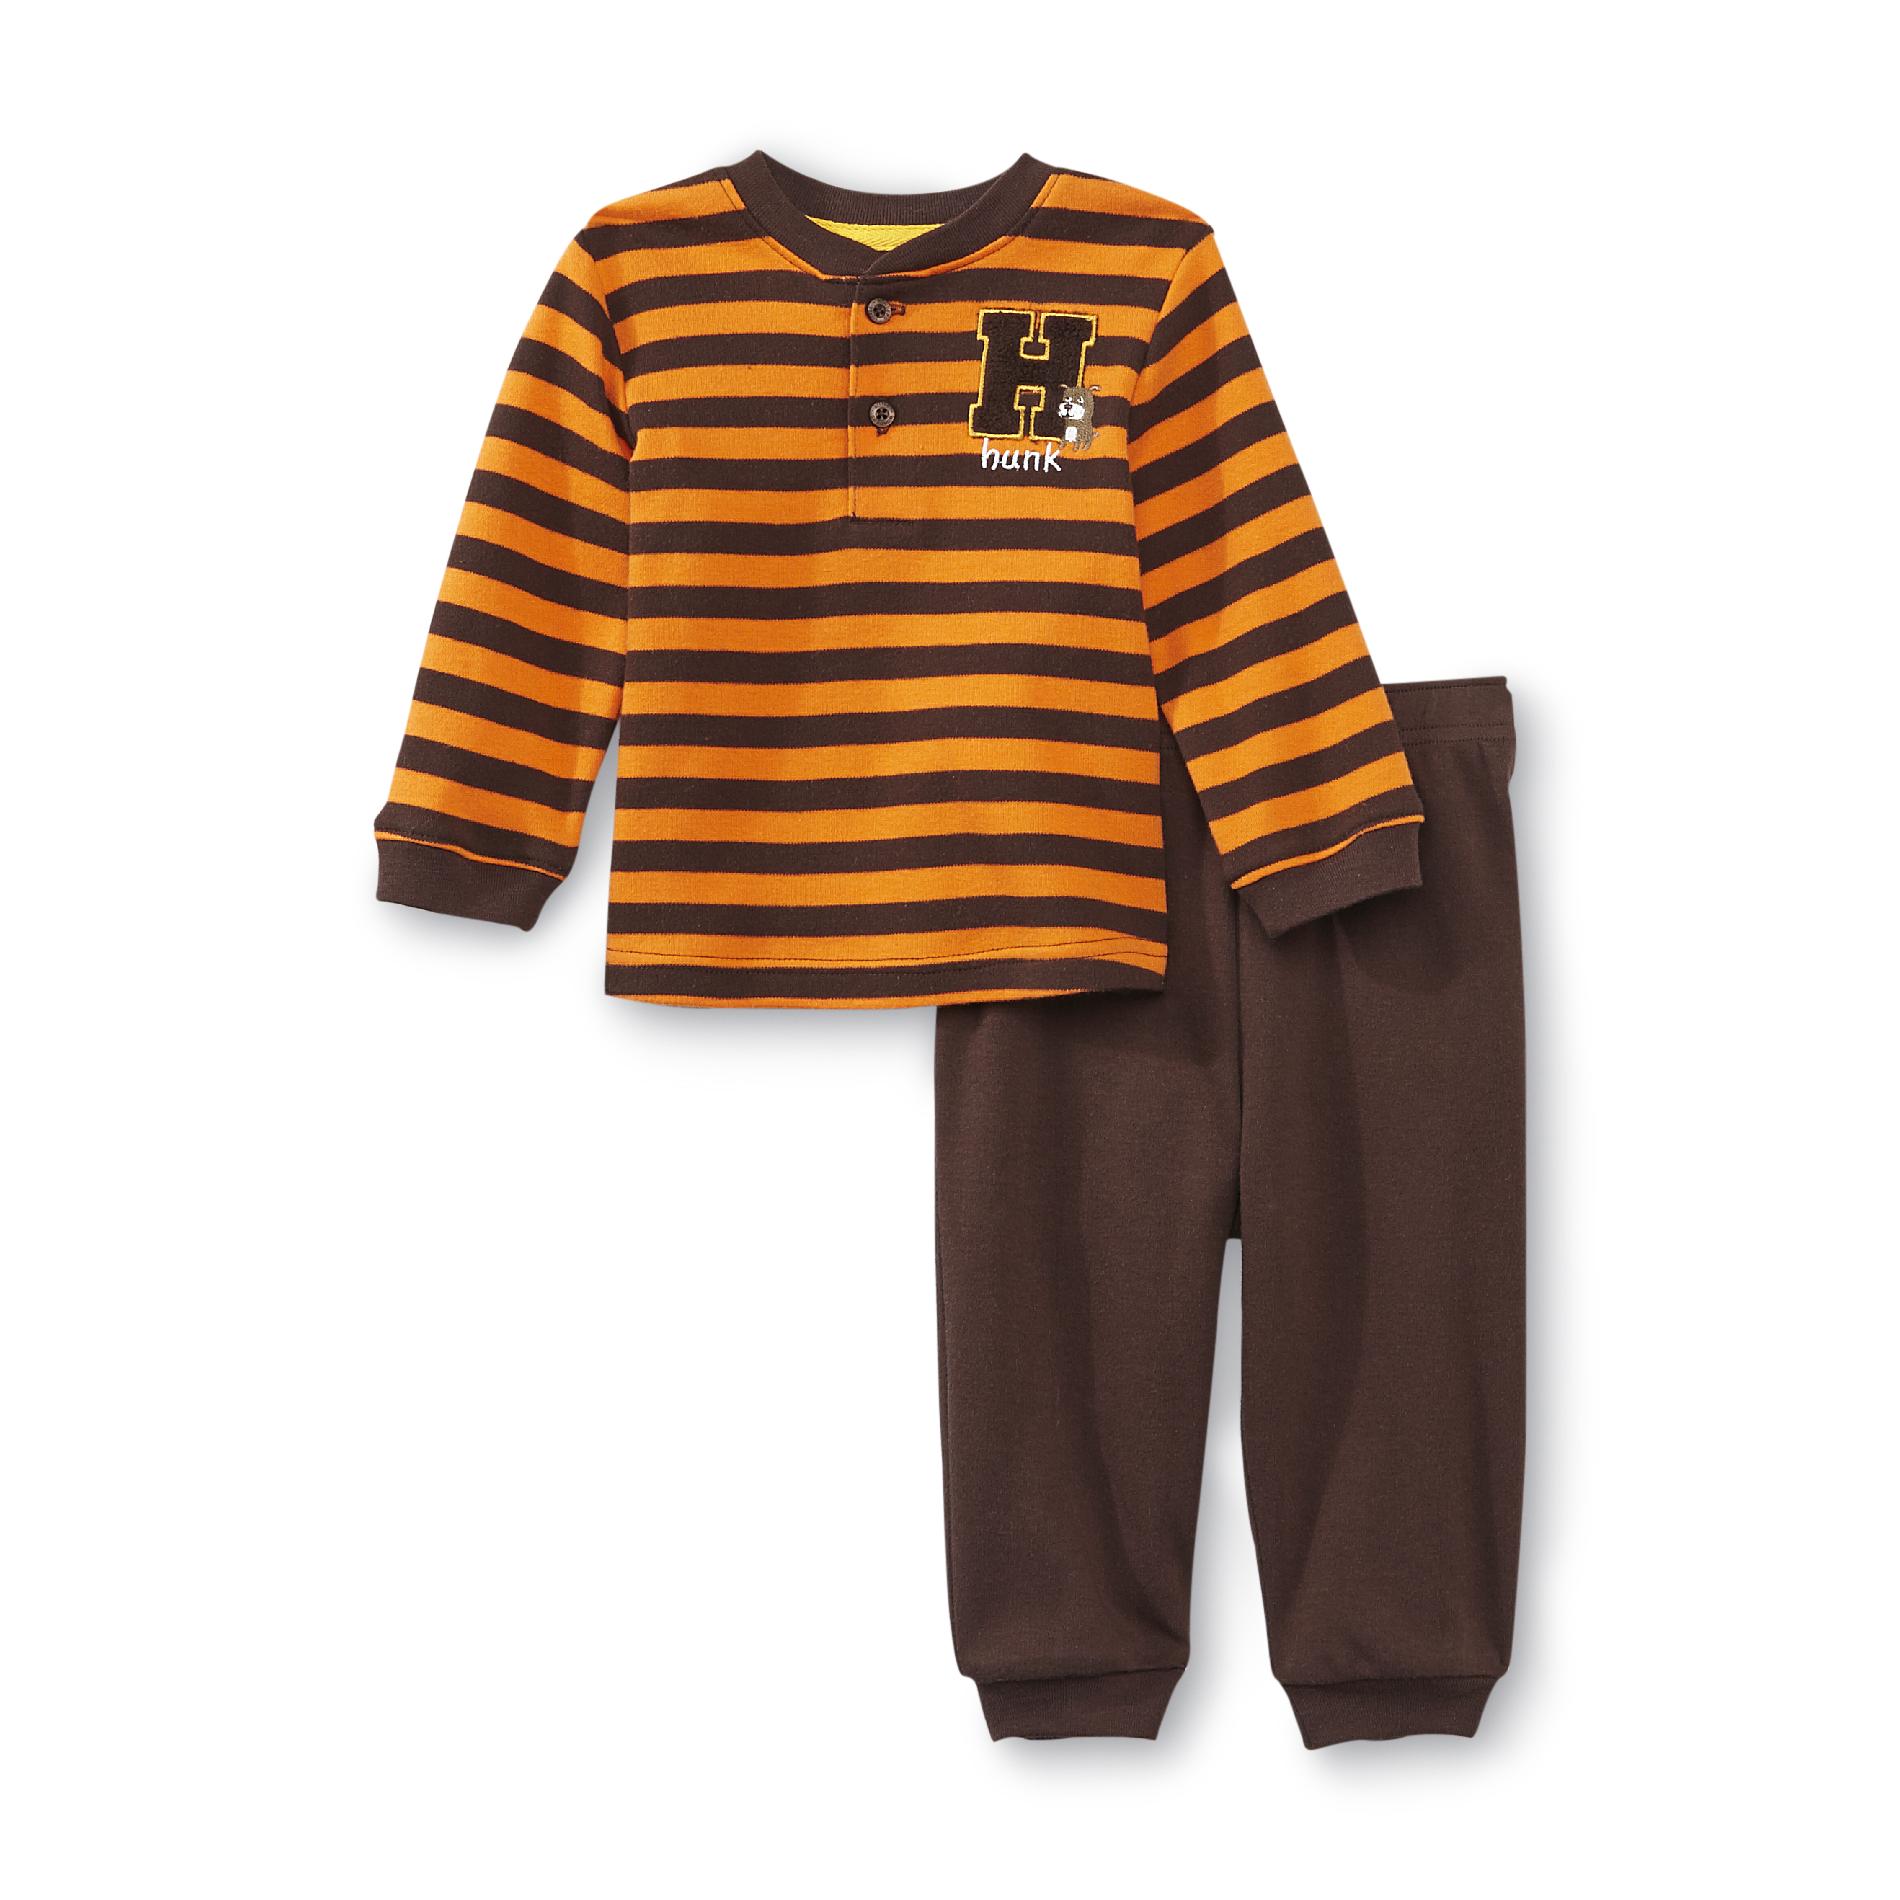 Little Wonders Newborn Boy's Long-Sleeve Shirt & Pants Set - Hunk